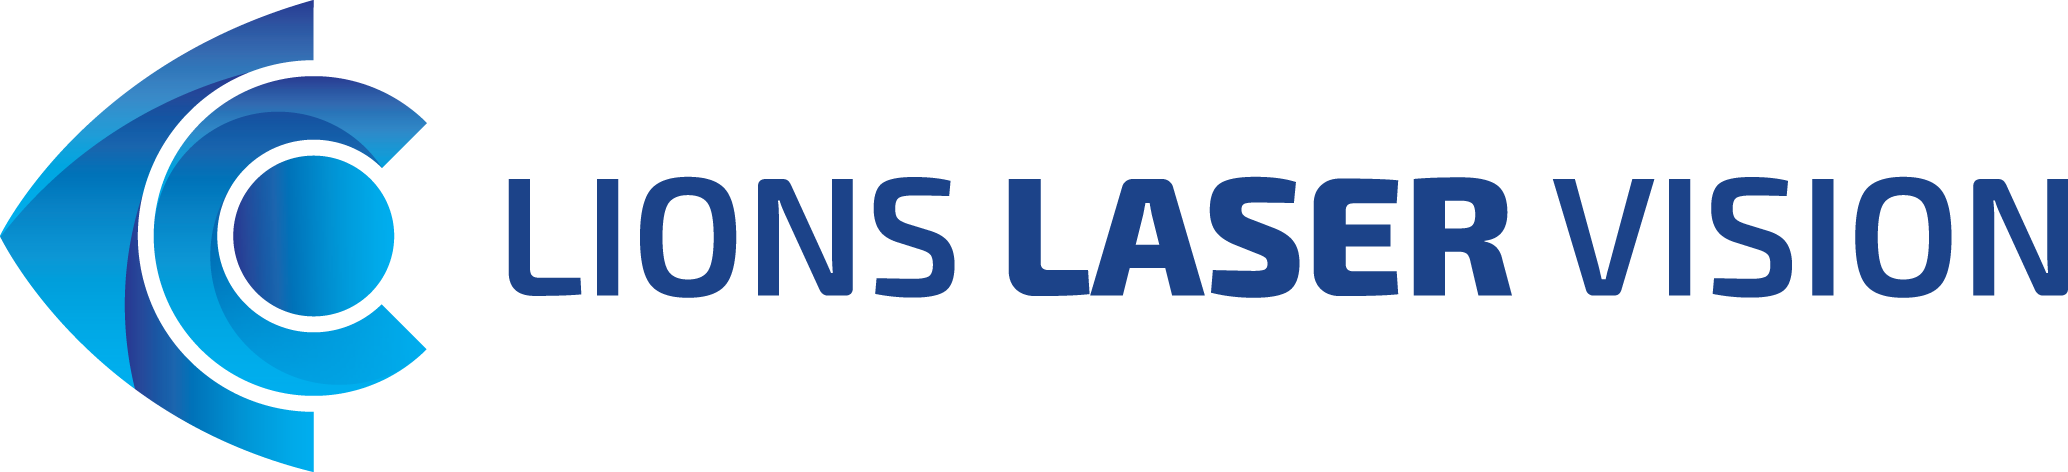 Lions Laser Vision - Service Manager Logo Clipart (2068x472), Png Download